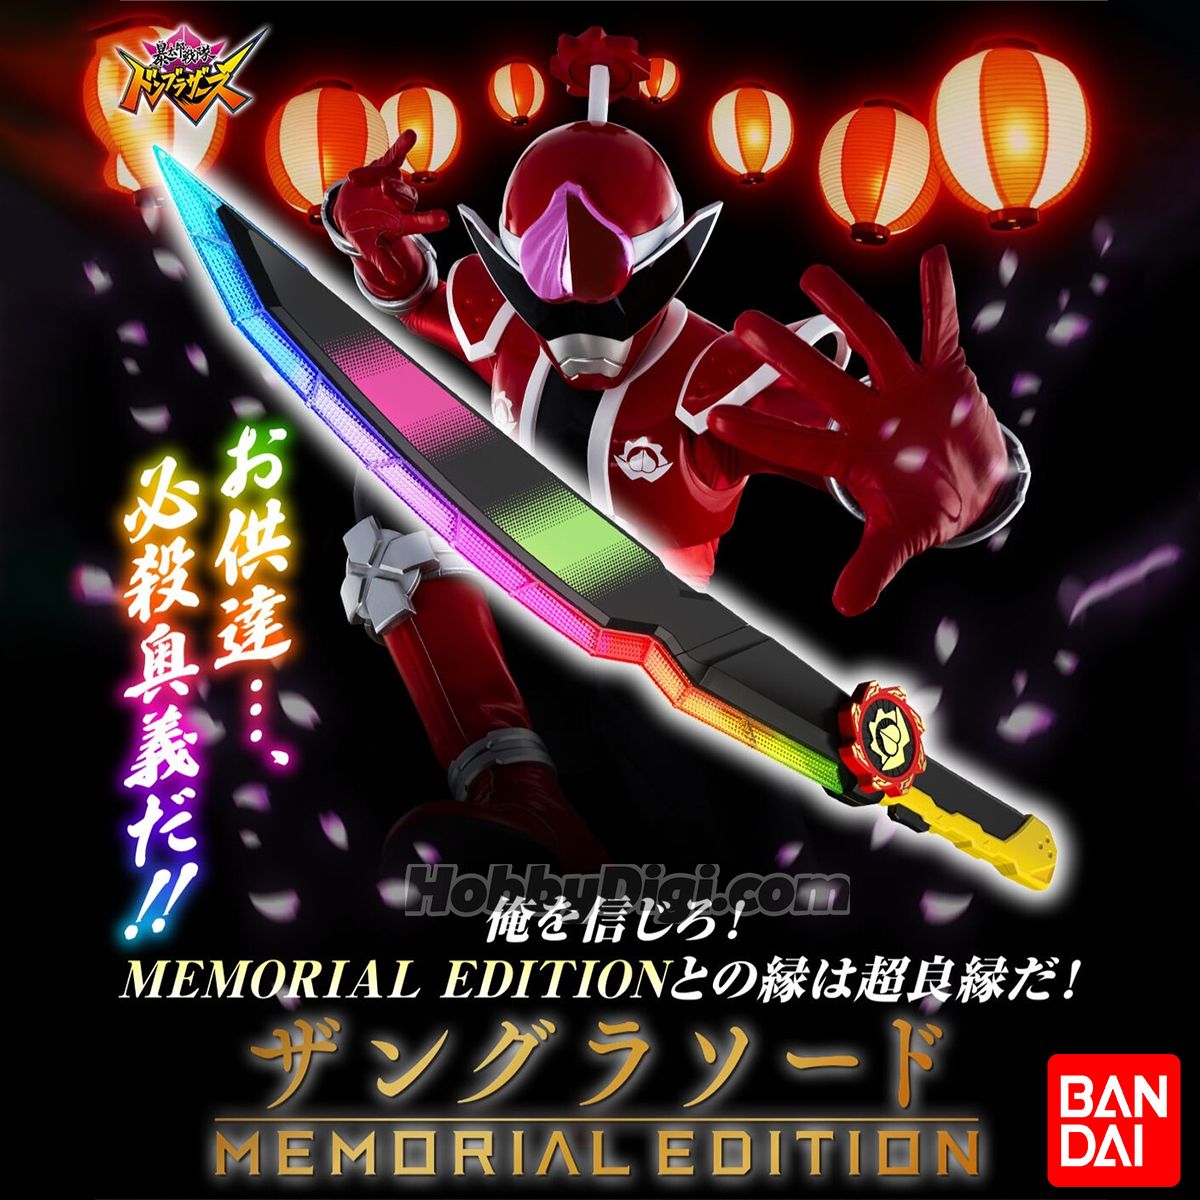 [PRE-ORDER] Avataro Sentai Donbrothers Zanglassword Memorial Edition